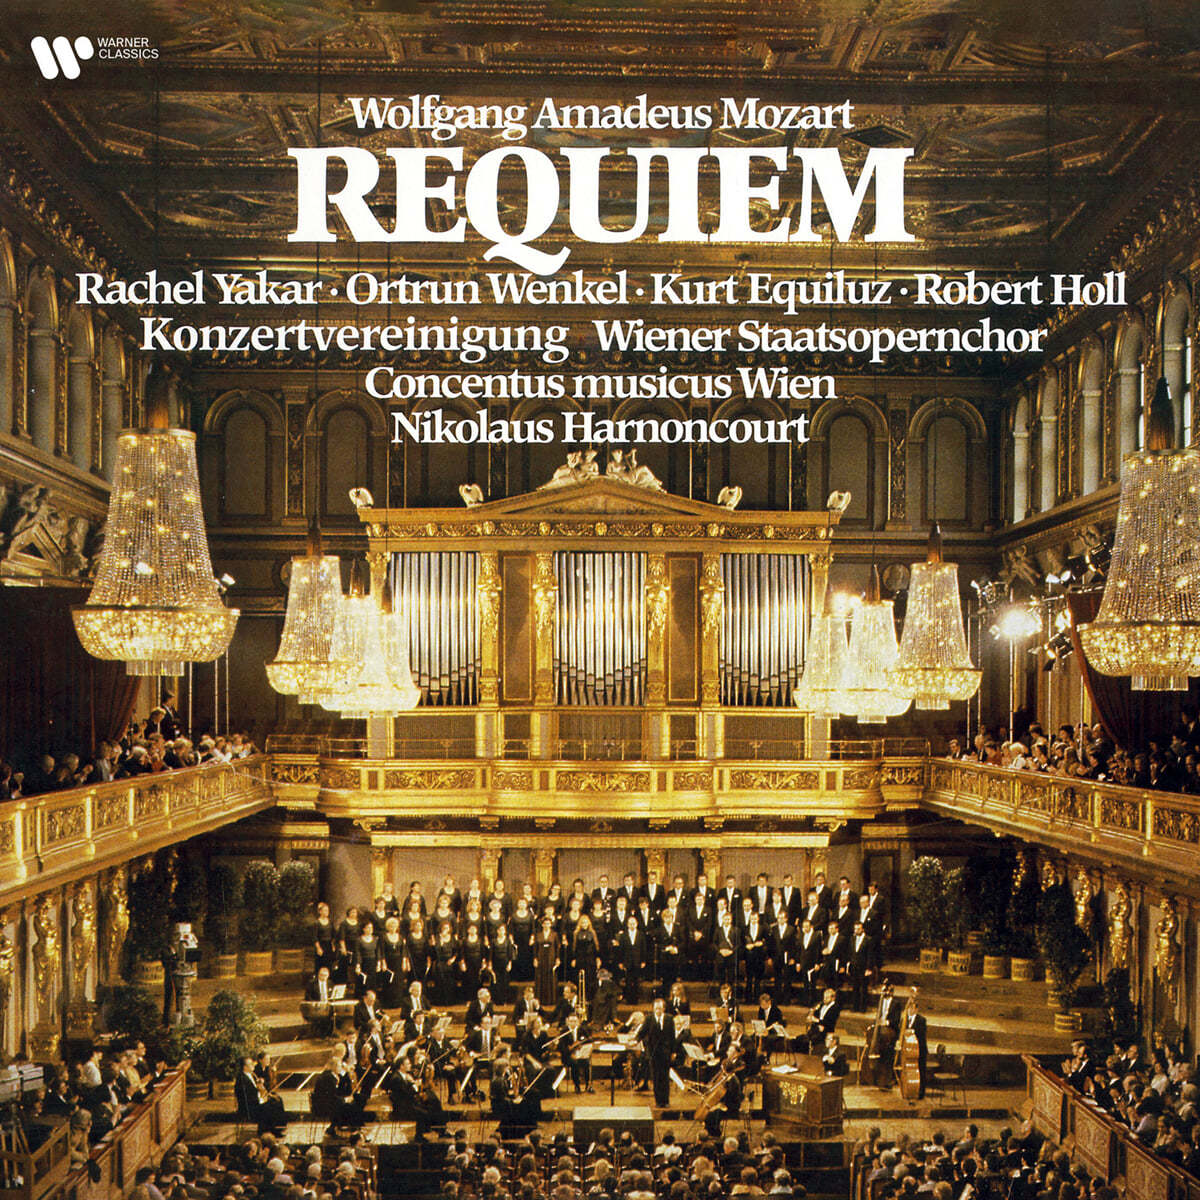 Nikolaus Harnoncourt 모차르트: 레퀴엠 - 아르농쿠르 (Mozart: Requiem K.626) [LP] 